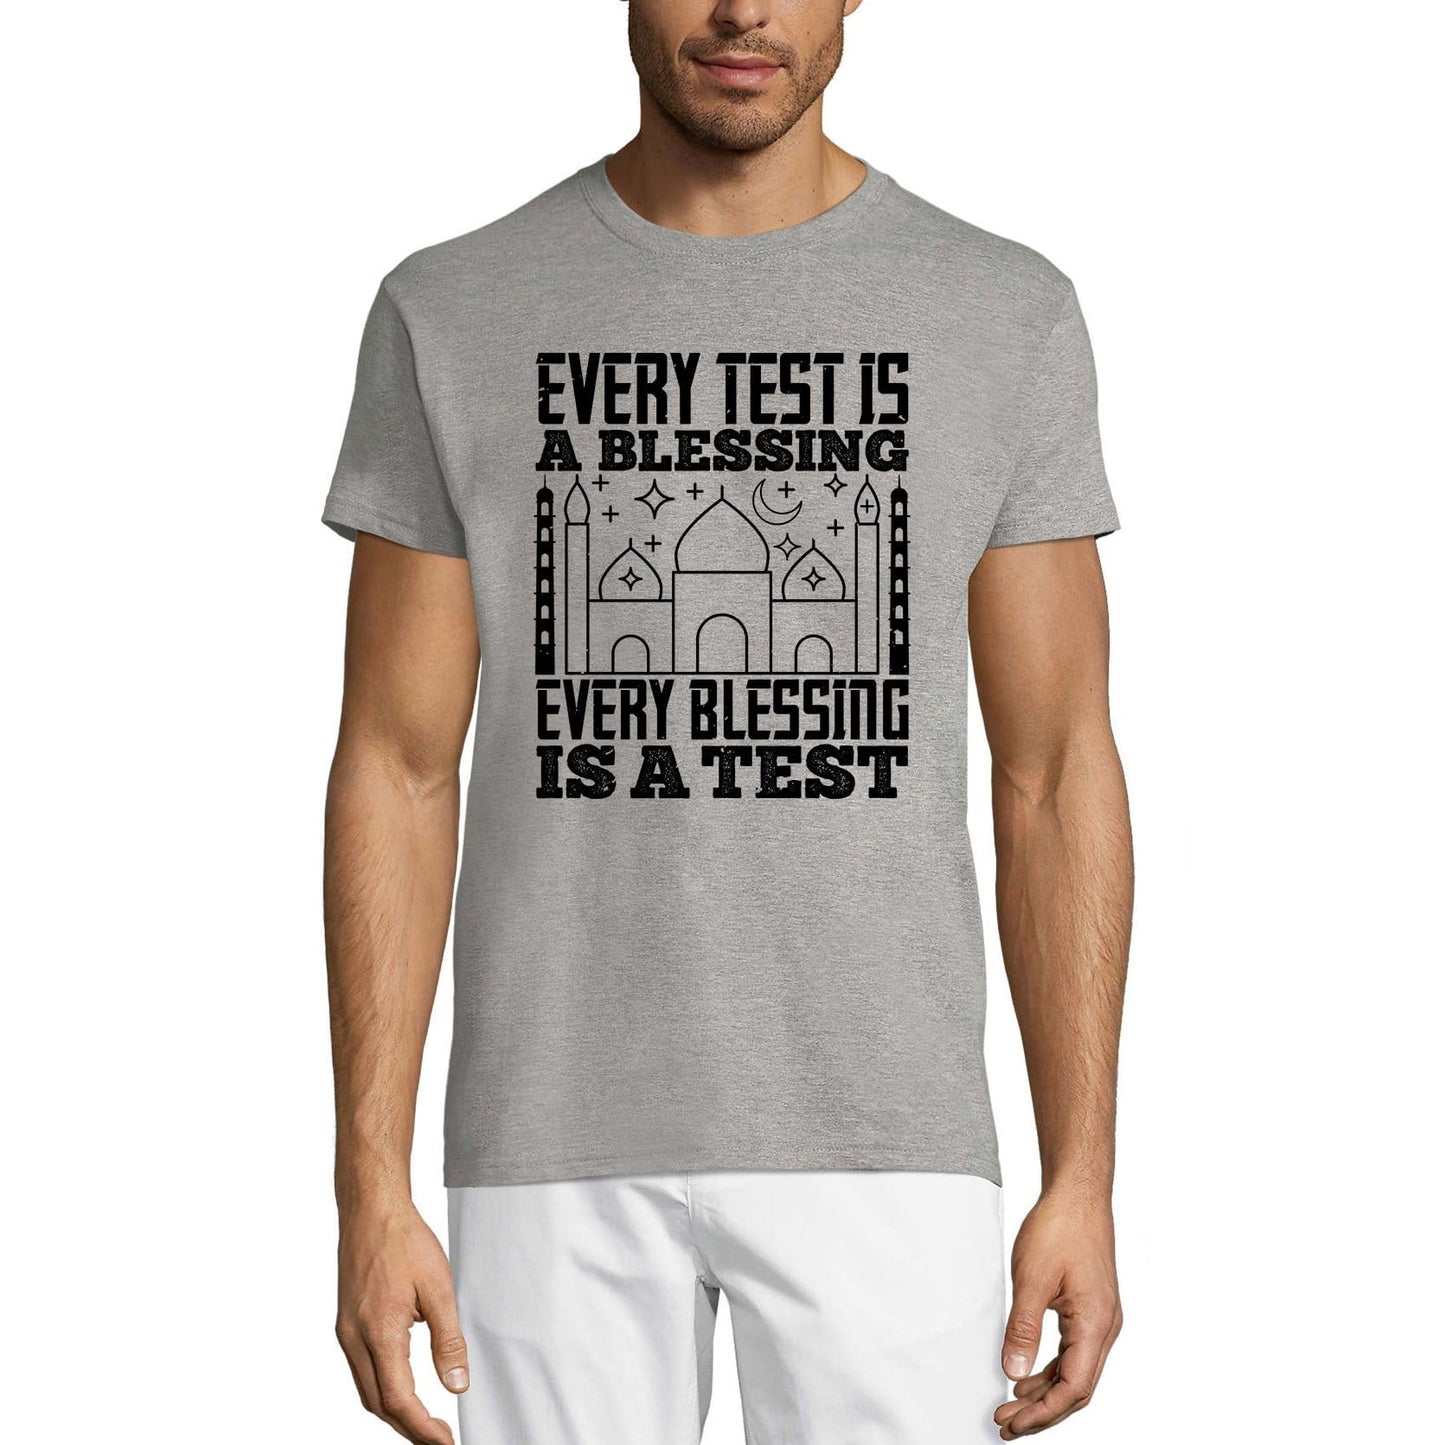 ULTRABASIC Men's T-Shirt Every Test is a Blessing Every Blessing is a Test - Mosque Tee Shirt